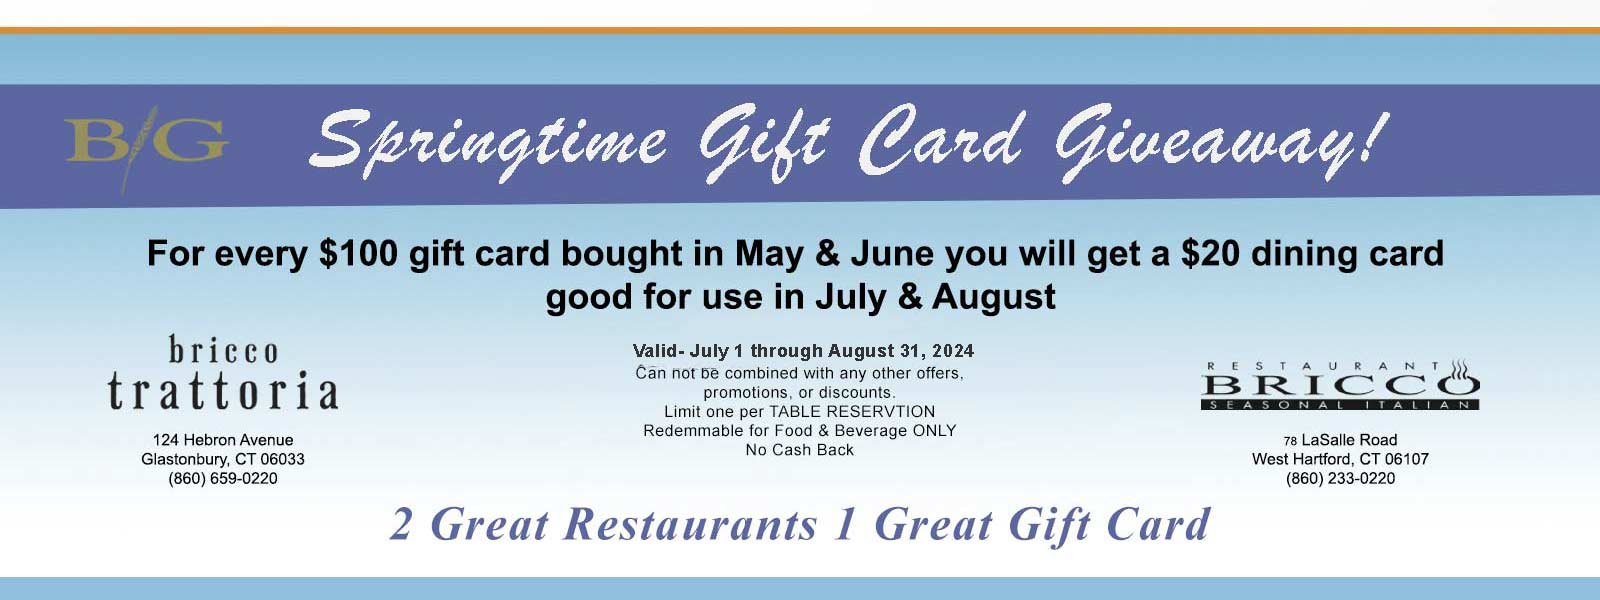 Billy Grant Restaurant Bricco and Bricco Trattoria SPring Gift Card Savings Special.